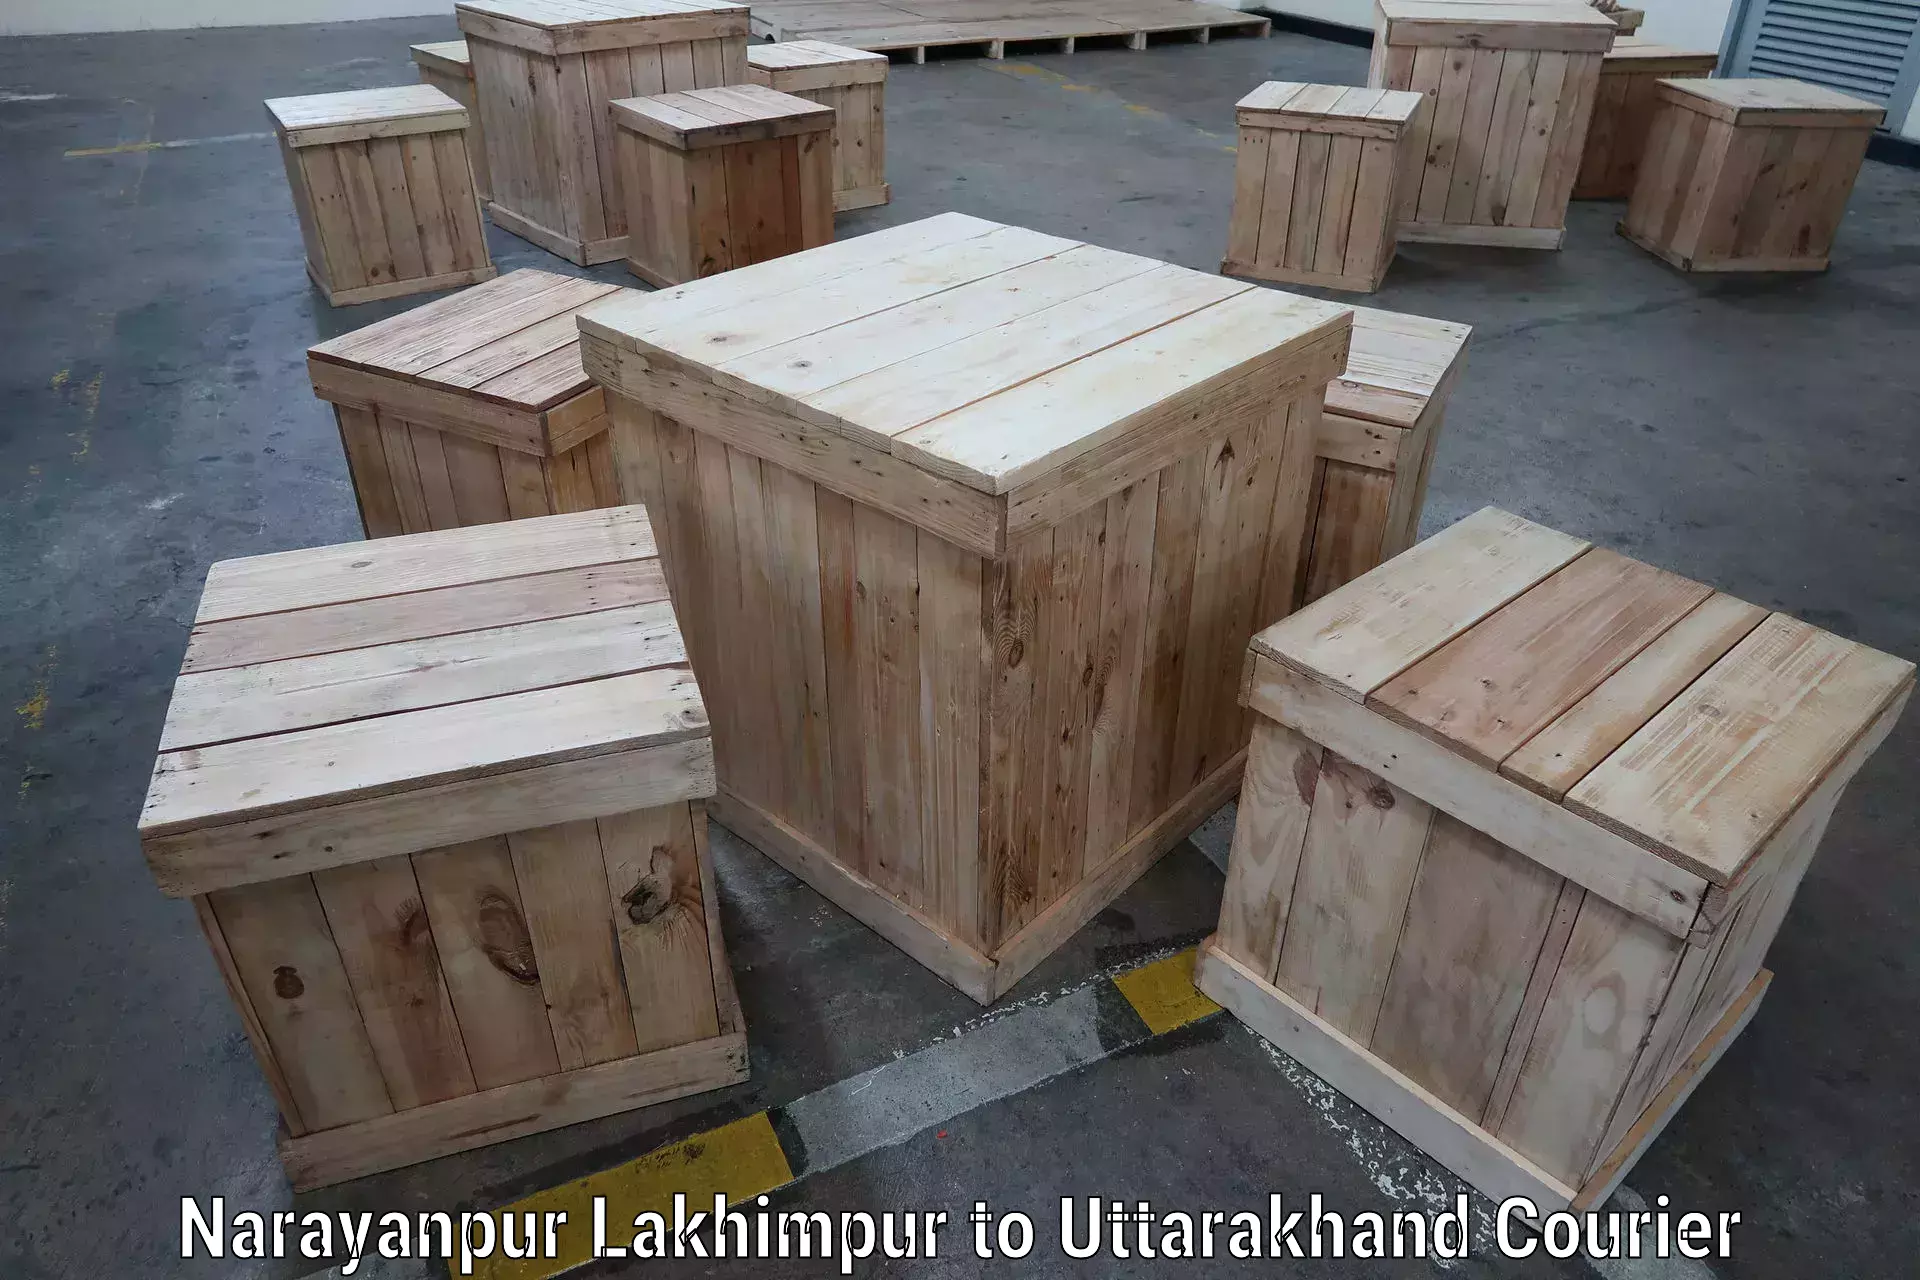 High-performance logistics in Narayanpur Lakhimpur to Almora